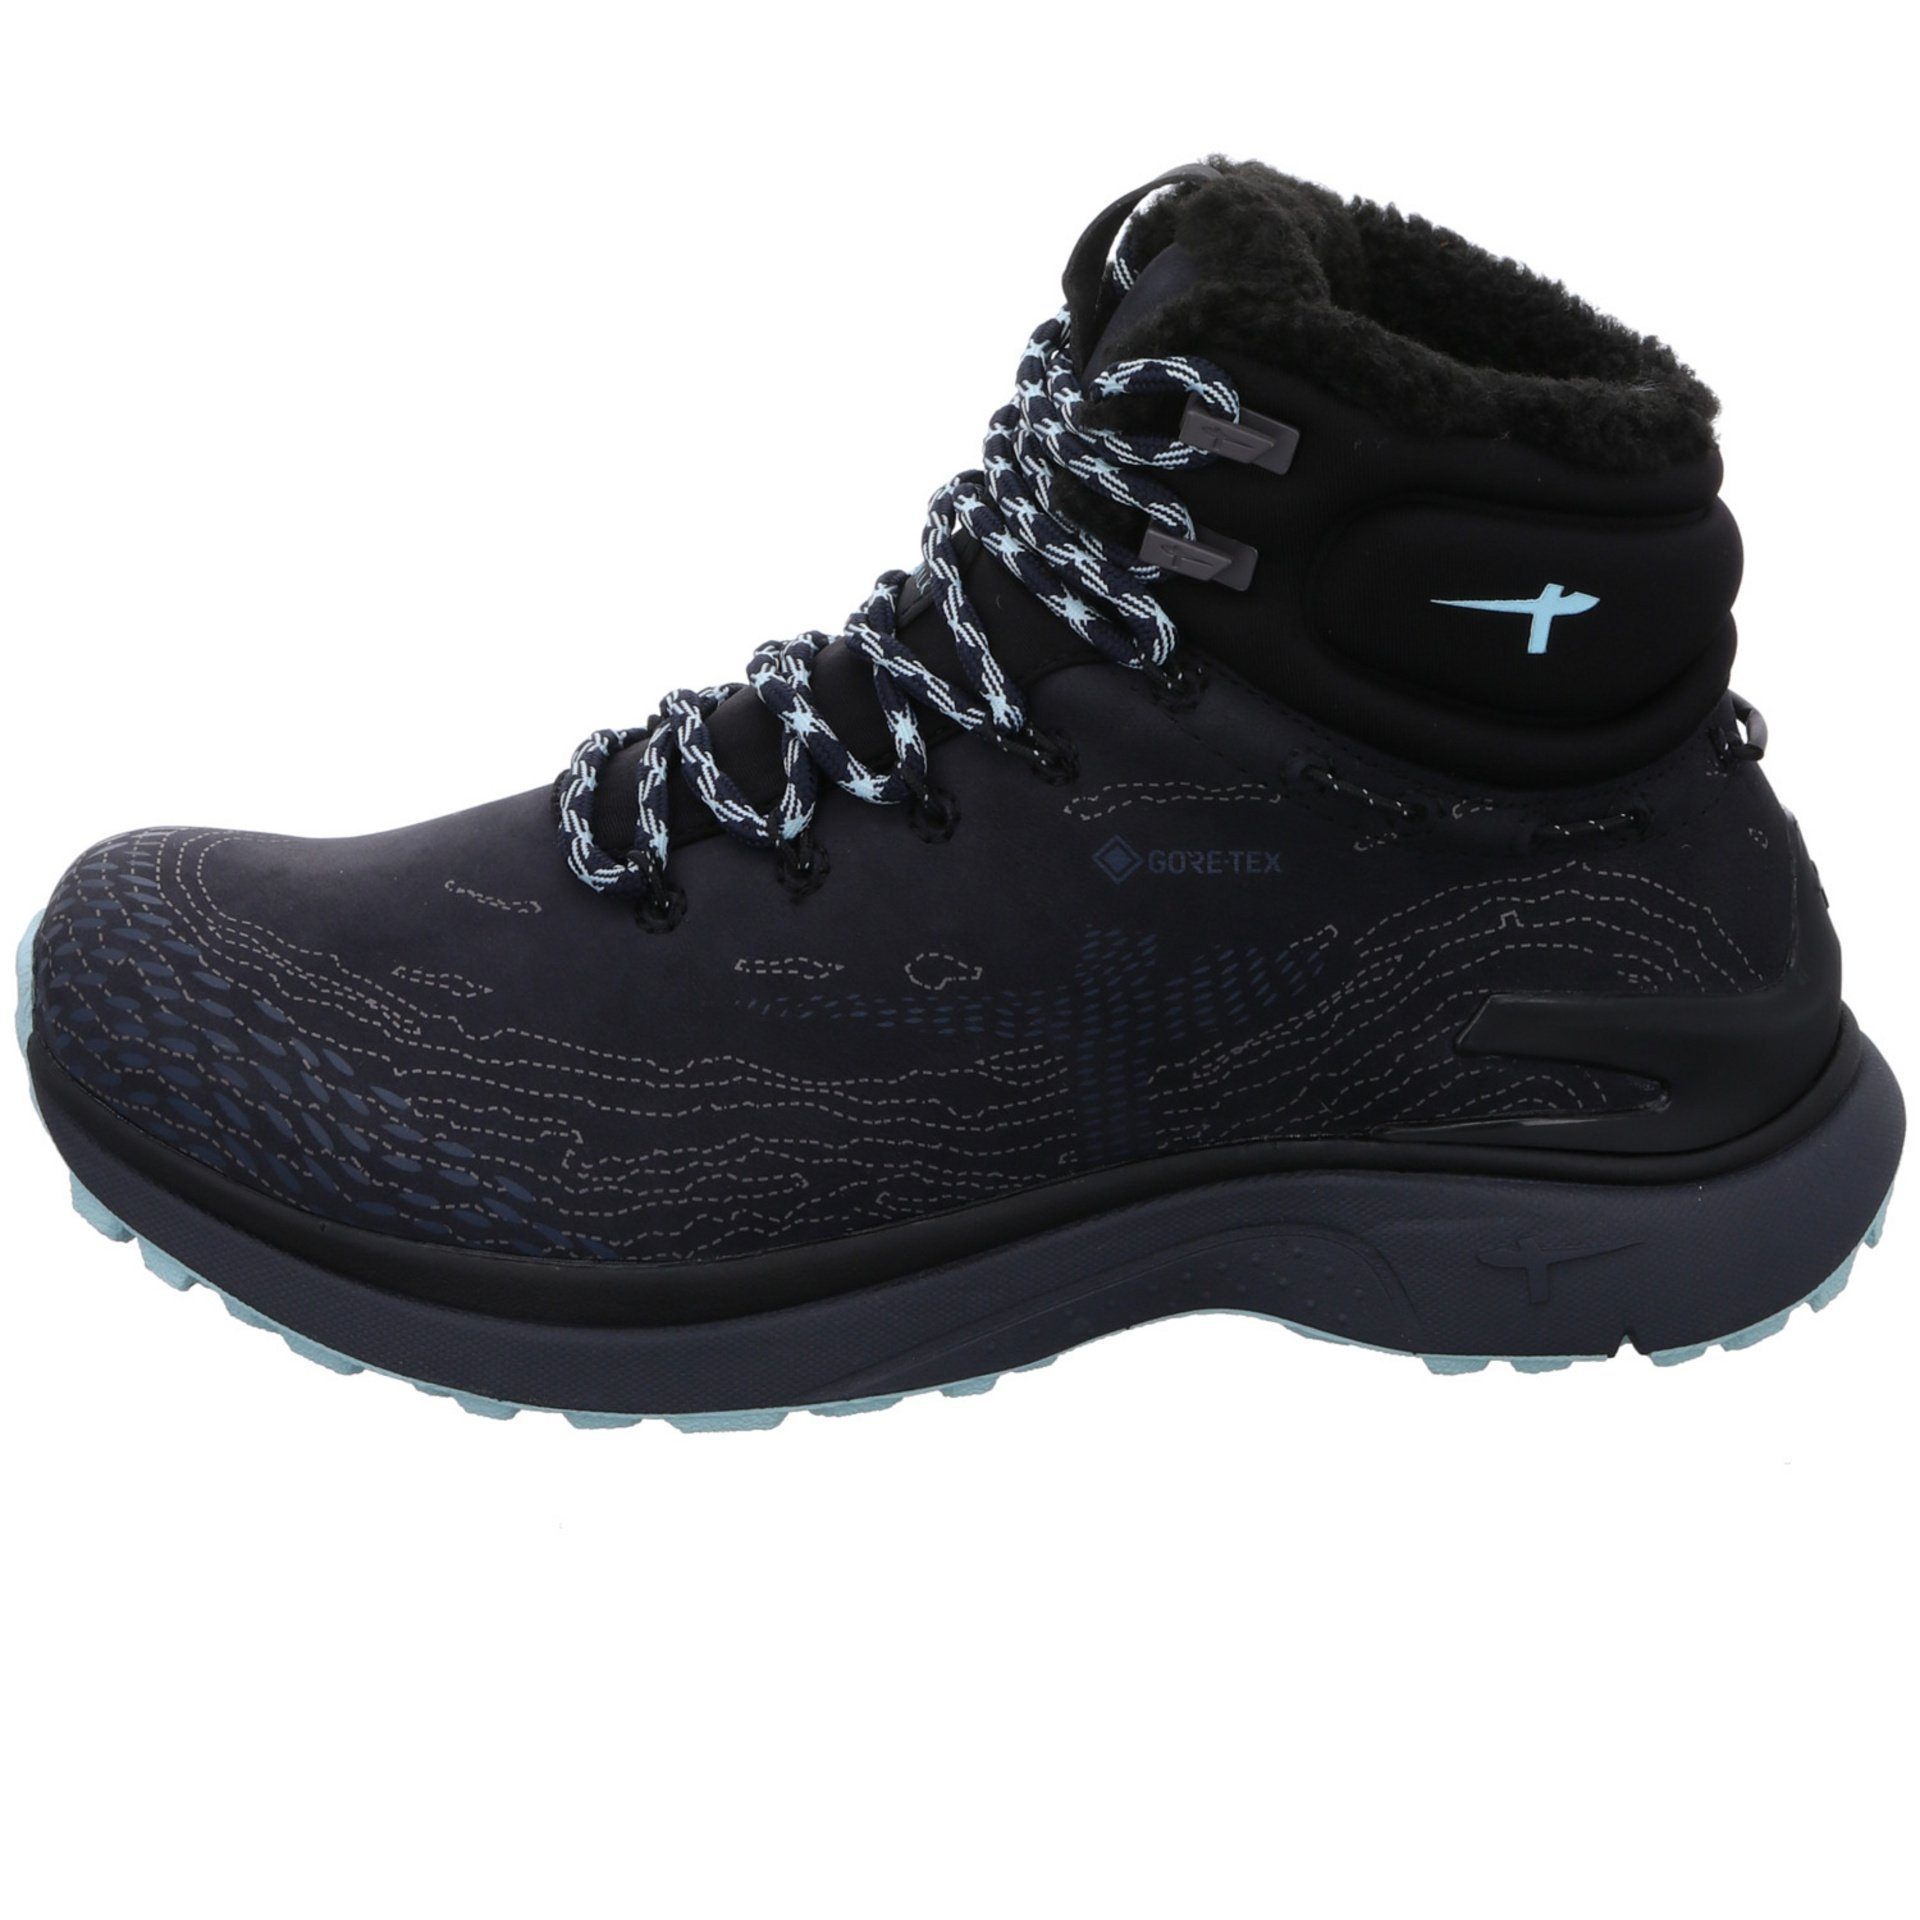 Tamaris Damen Outdoor Outdoorschuh Schuhe dunkel Leder-/Textilkombination blau Gore-Tex Outdoorschuh